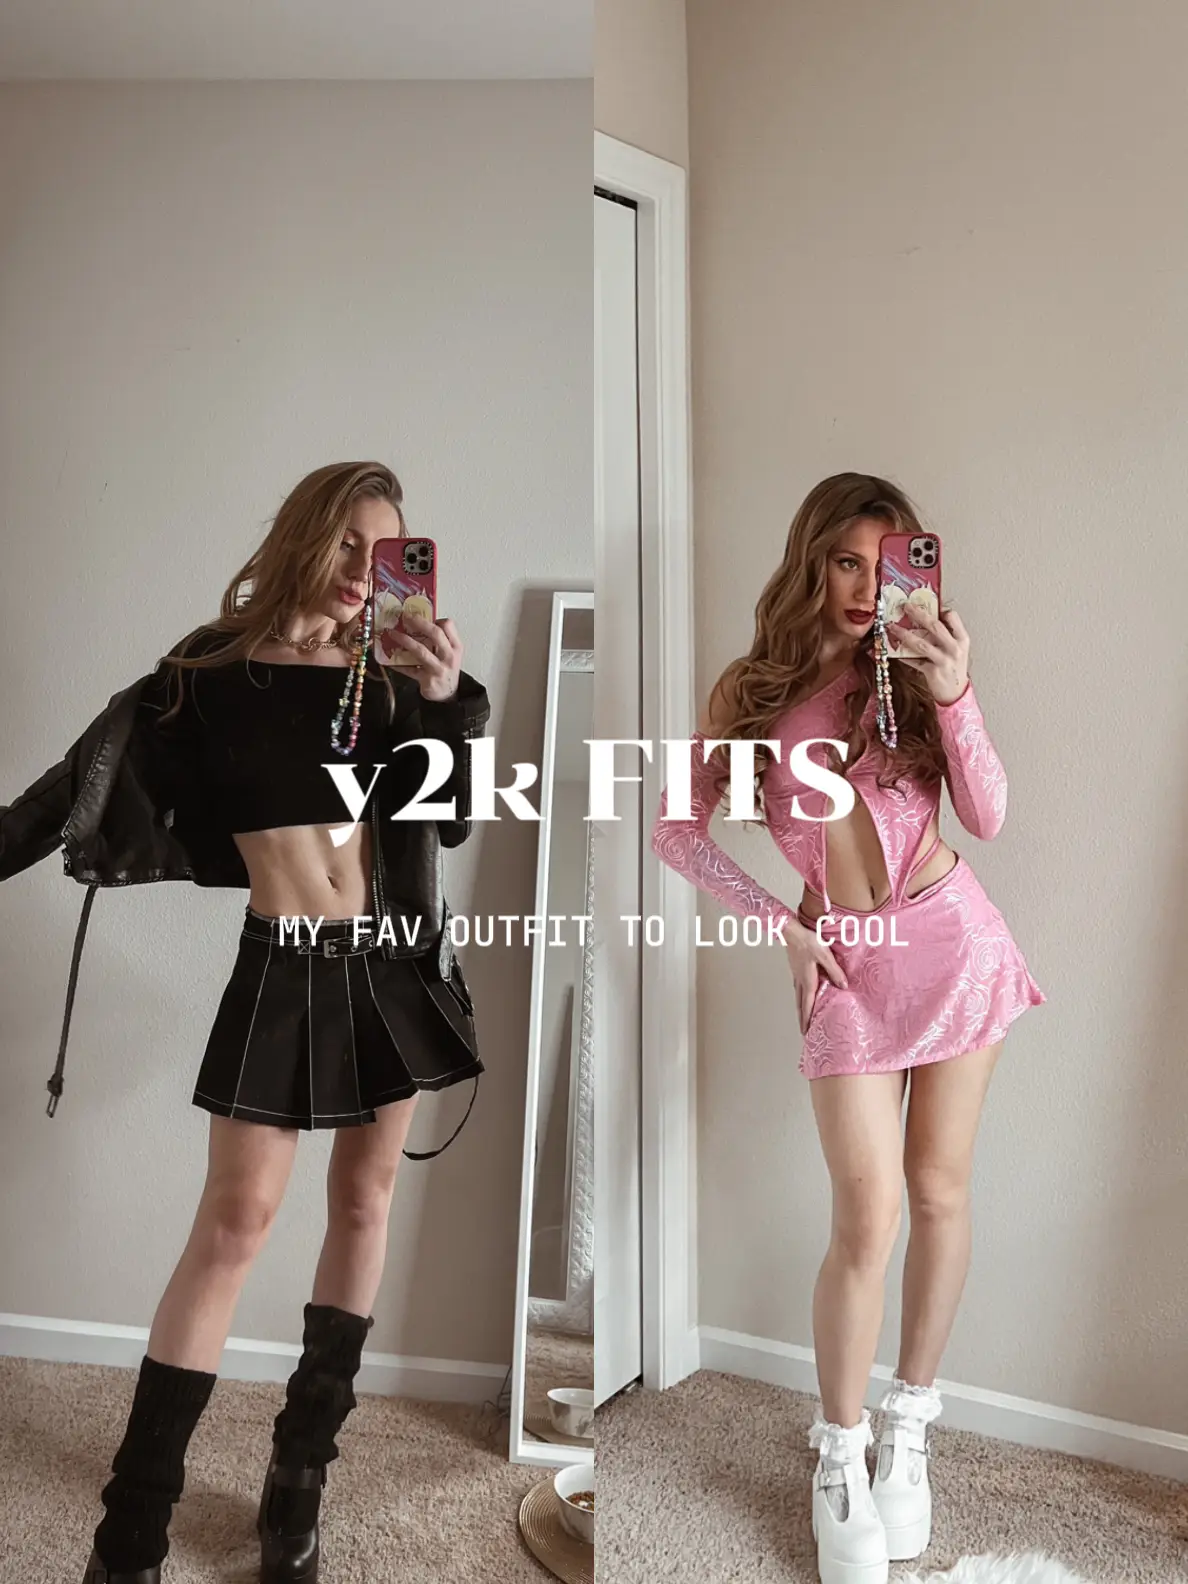 Outfit idea ( y2k girl ) 🤎🎧